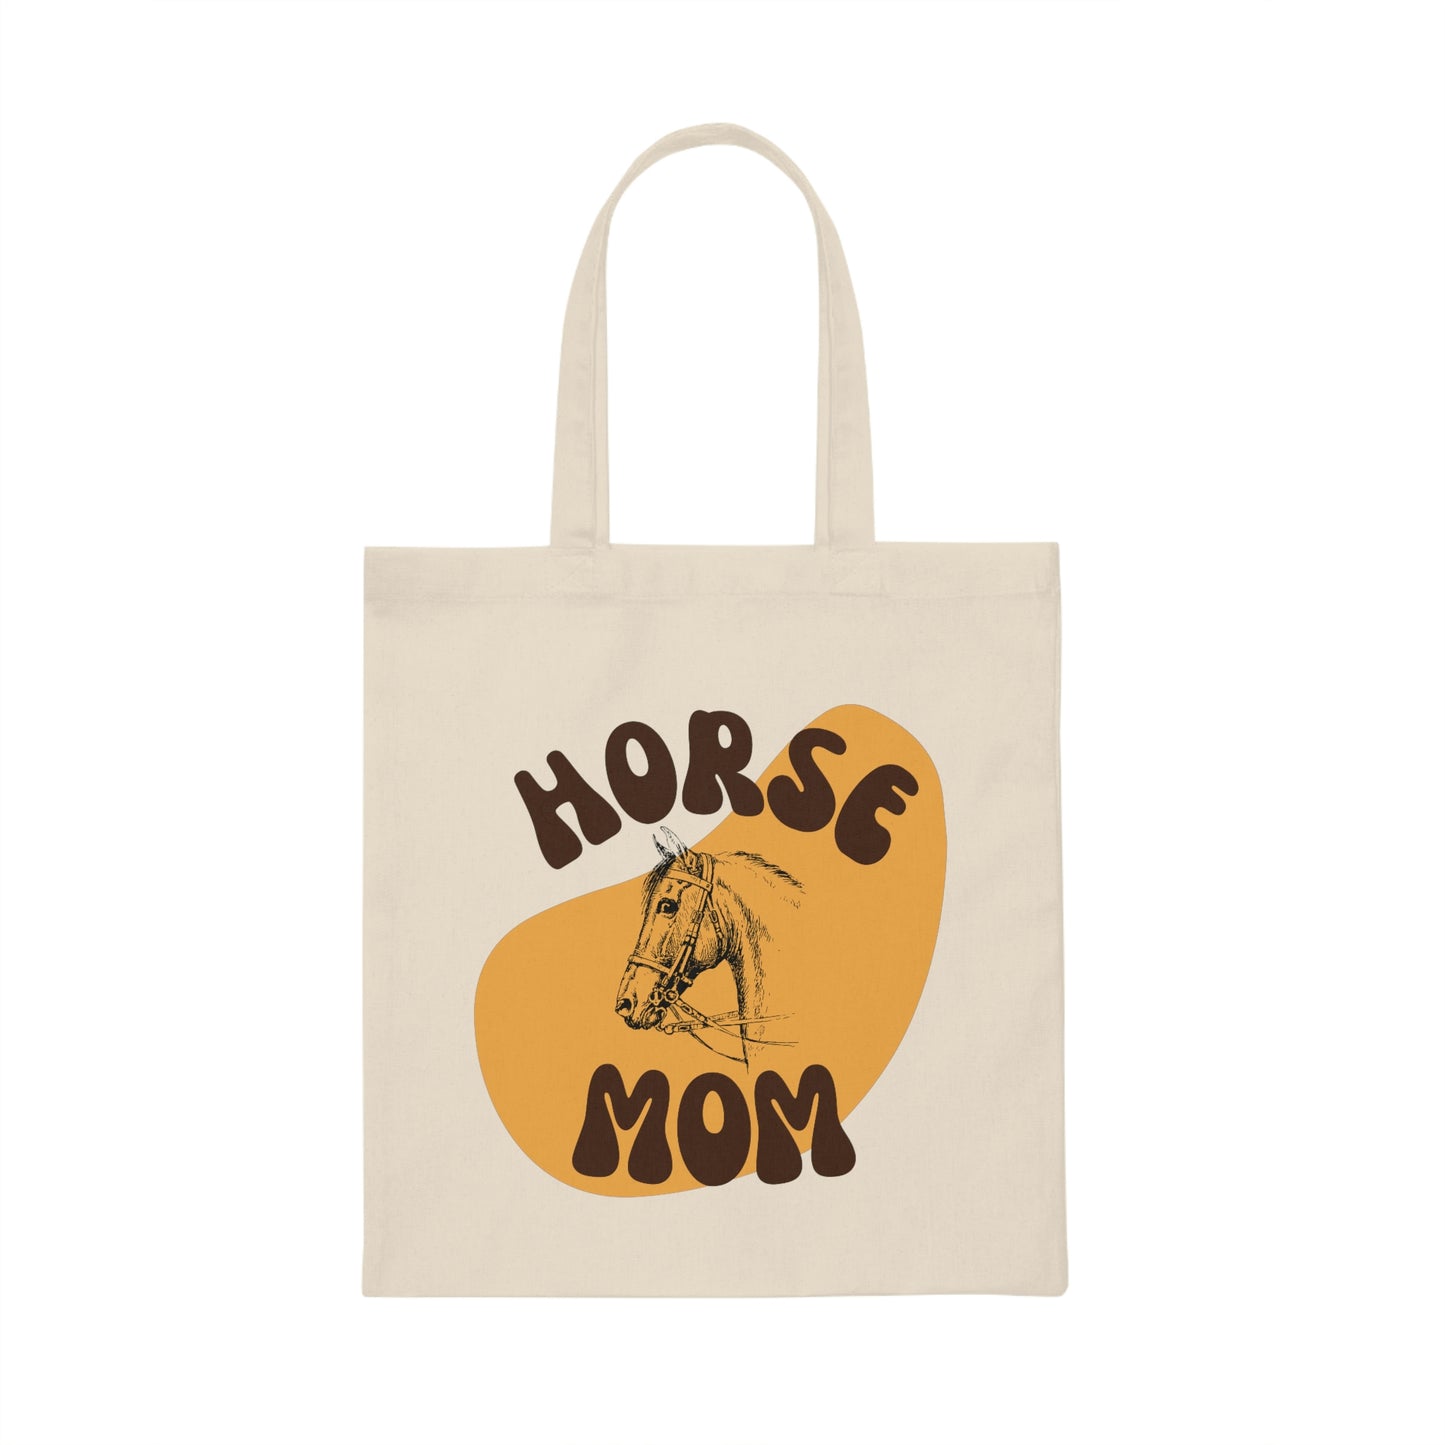 Horse Mom Canvas Tote Bag